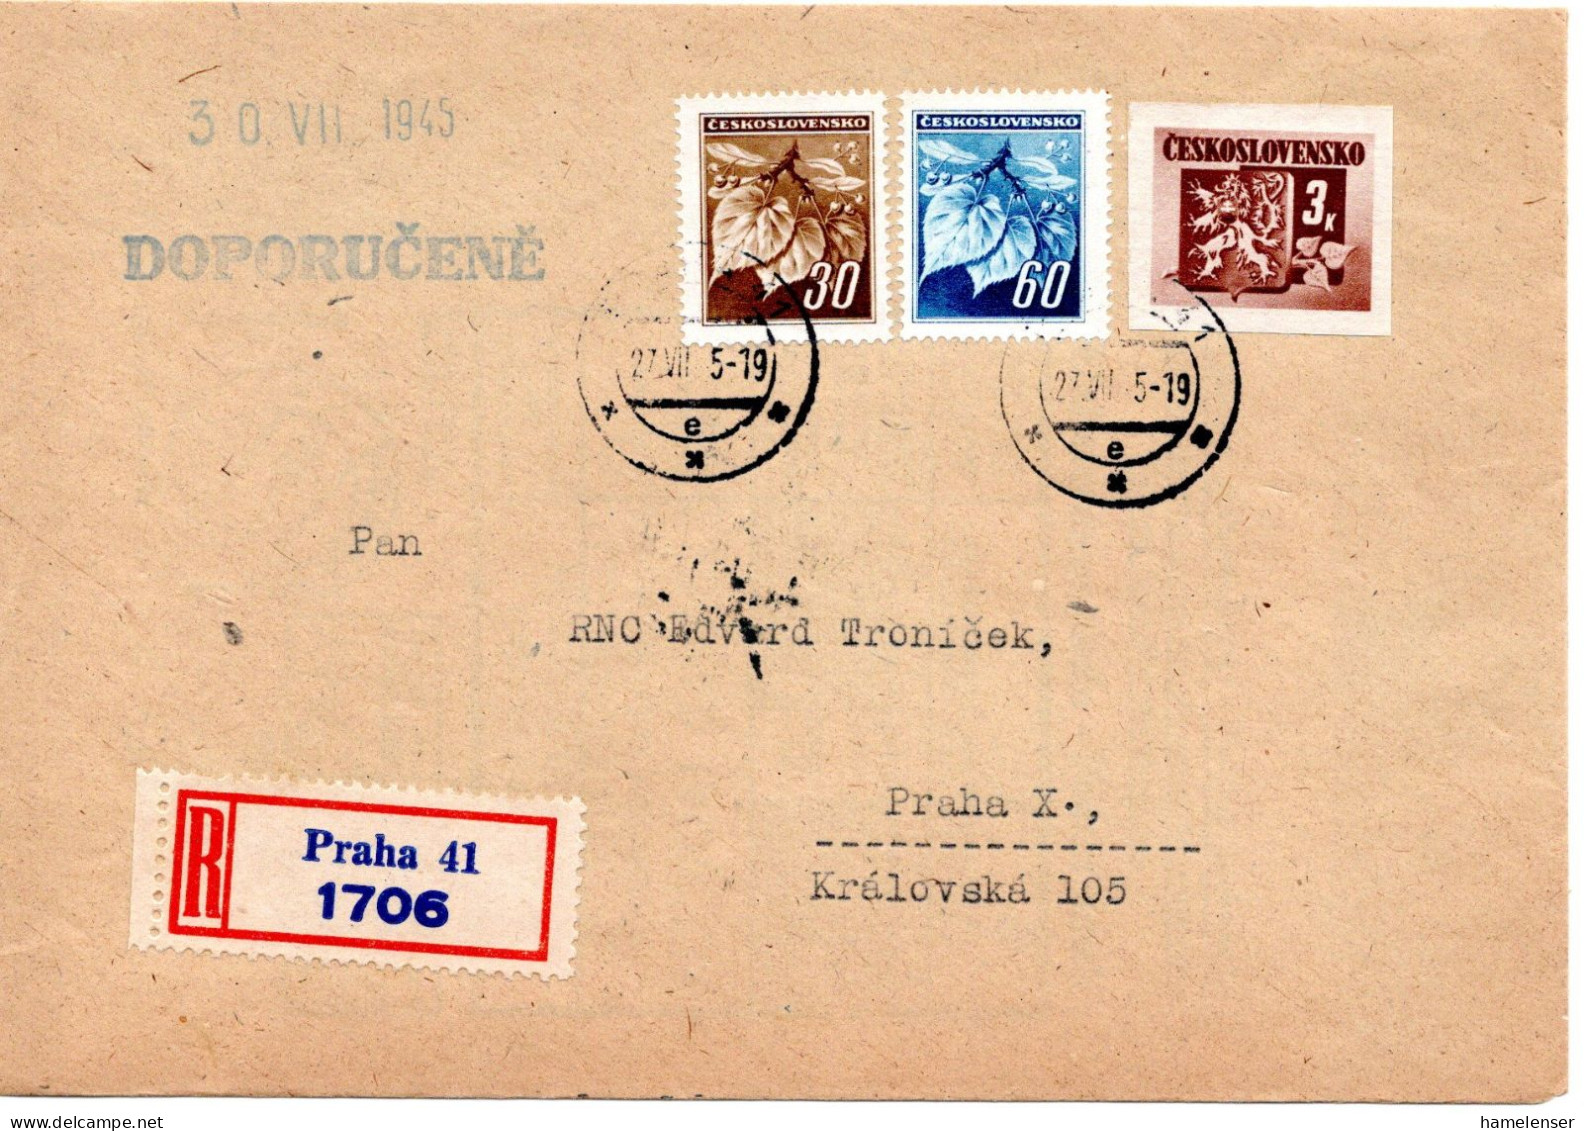 64692 - Tschechoslowakei - 1945 - 3K Wappen MiF A OrtsR-Bf PRAHA - Briefe U. Dokumente